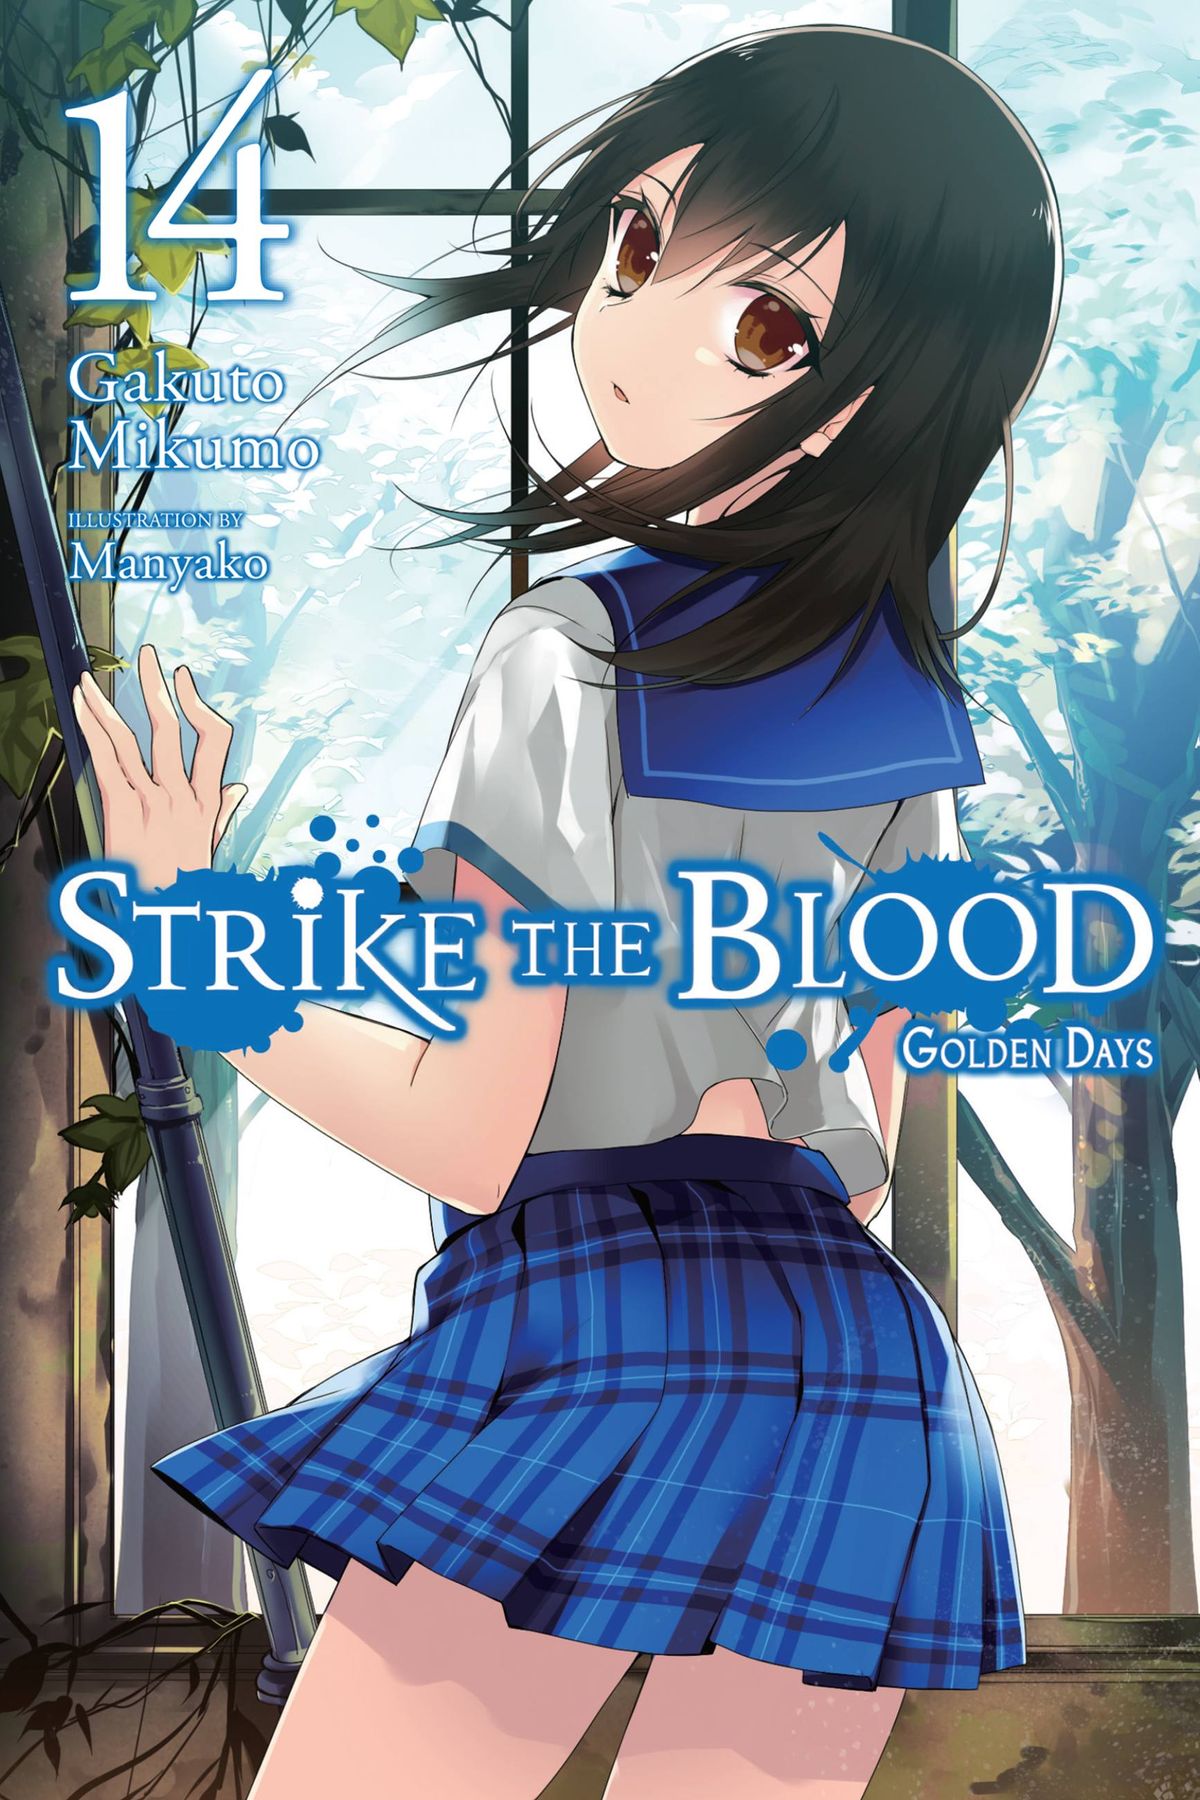 Strike the Blood – English Light Novels